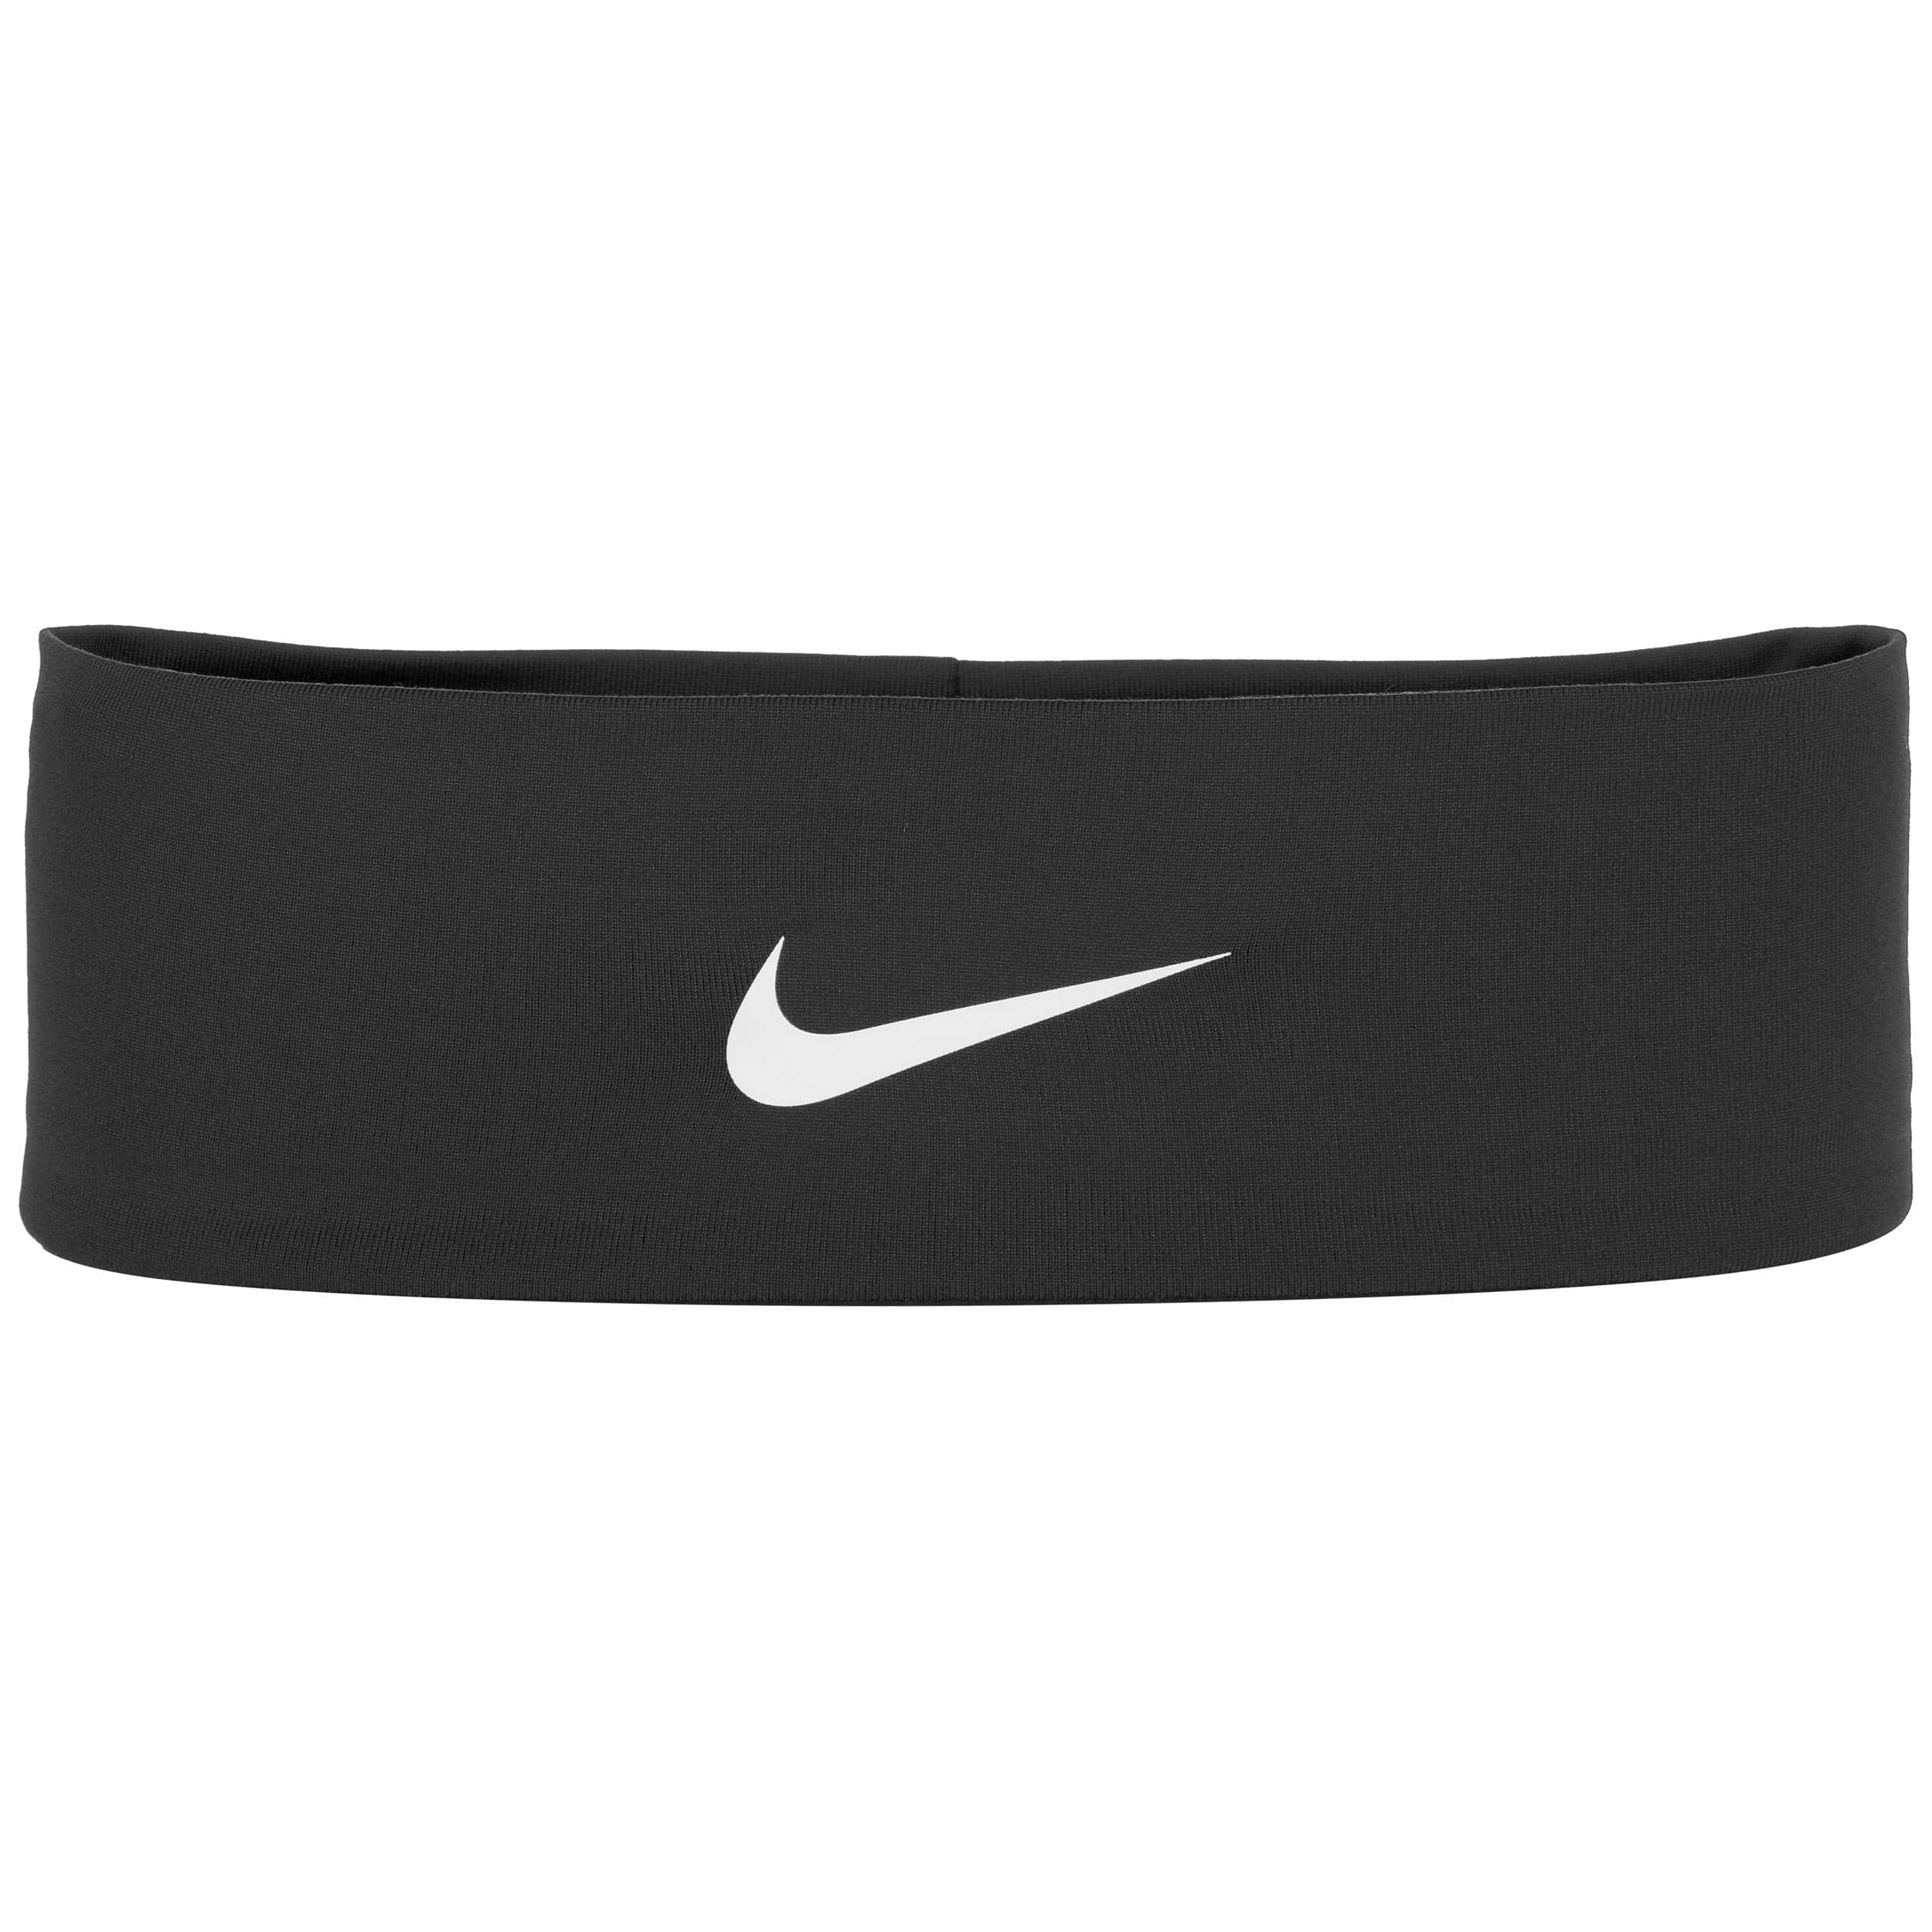 Fury Headband by Nike 28,95 €